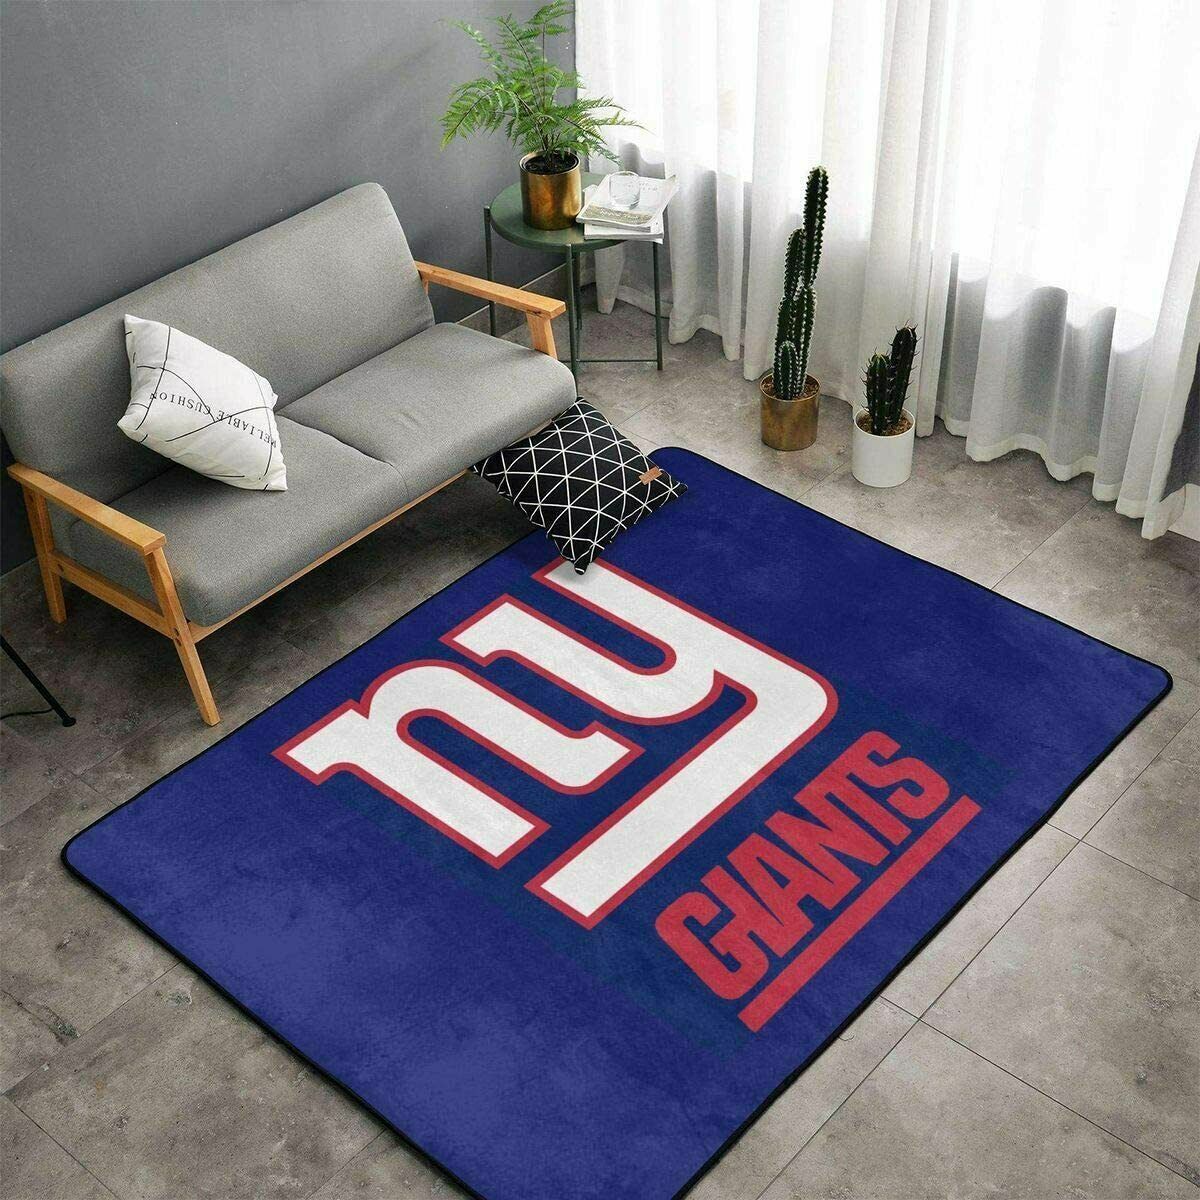 New York Giants Soft Area Rugs Carpets Living Room Anti-Skid Area Rugs Floor Mat Kupowanie bomb w kraju